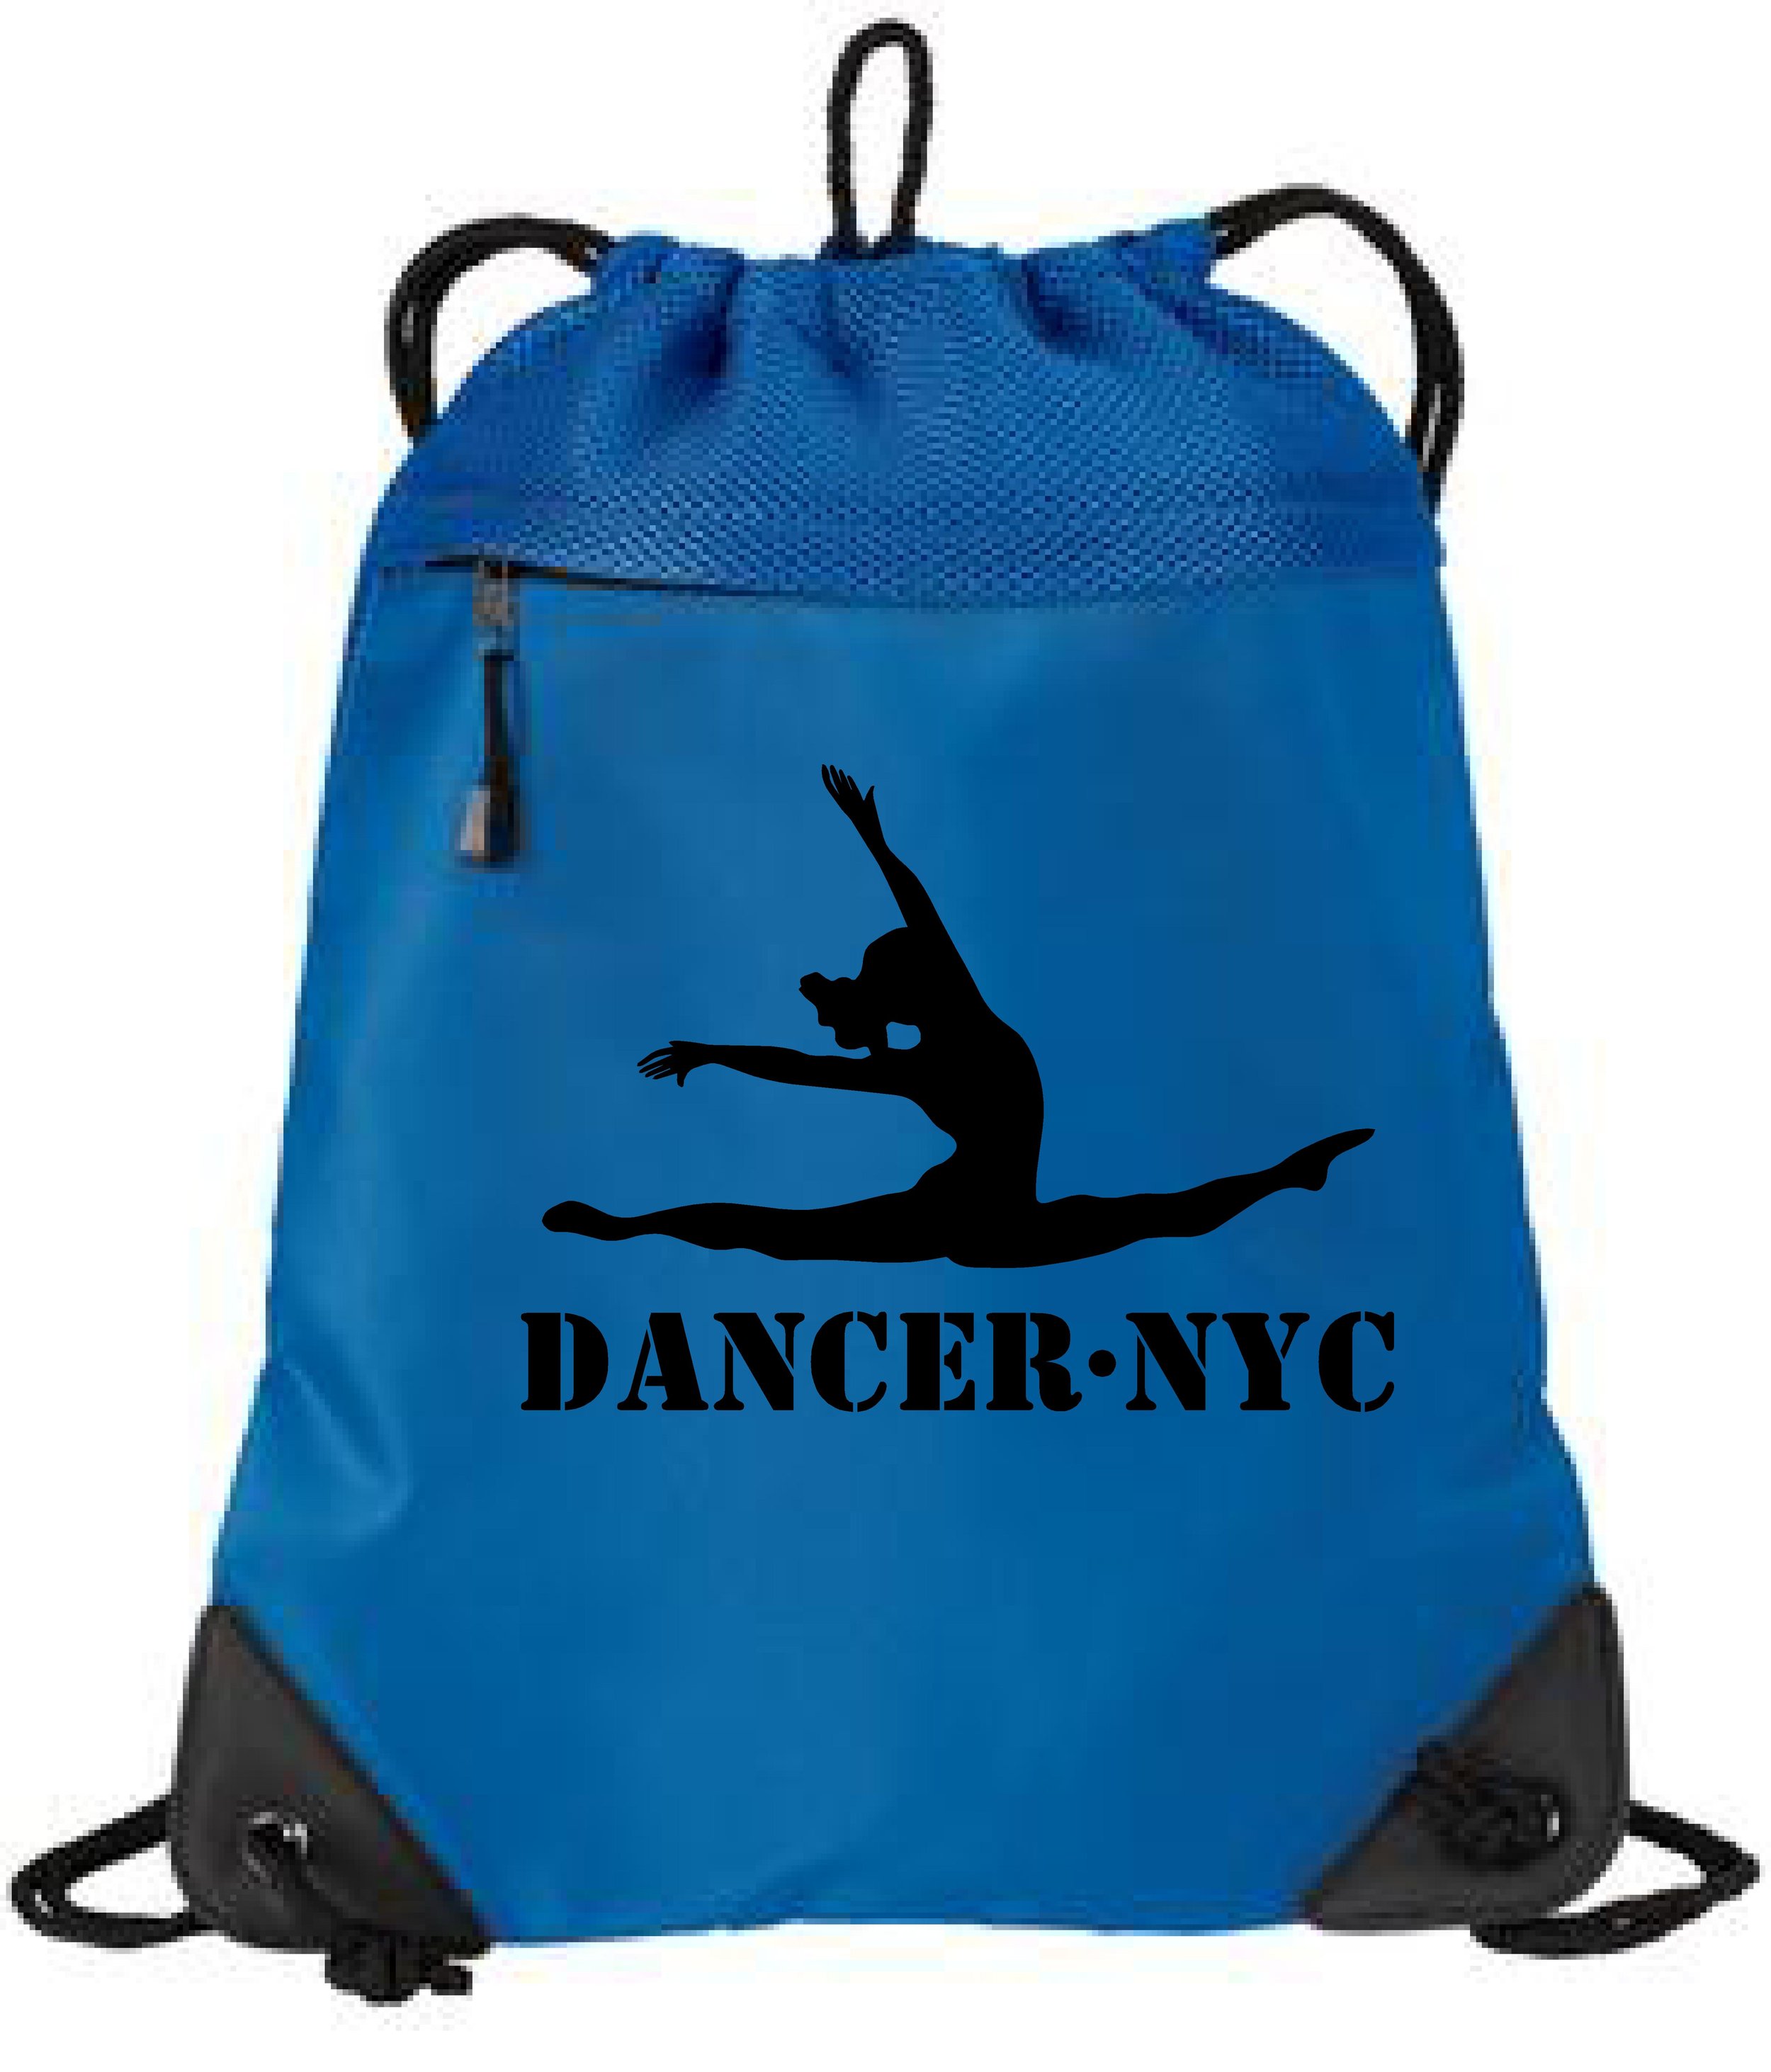 DANCER.NYC TOTE BAG - Bright Blue